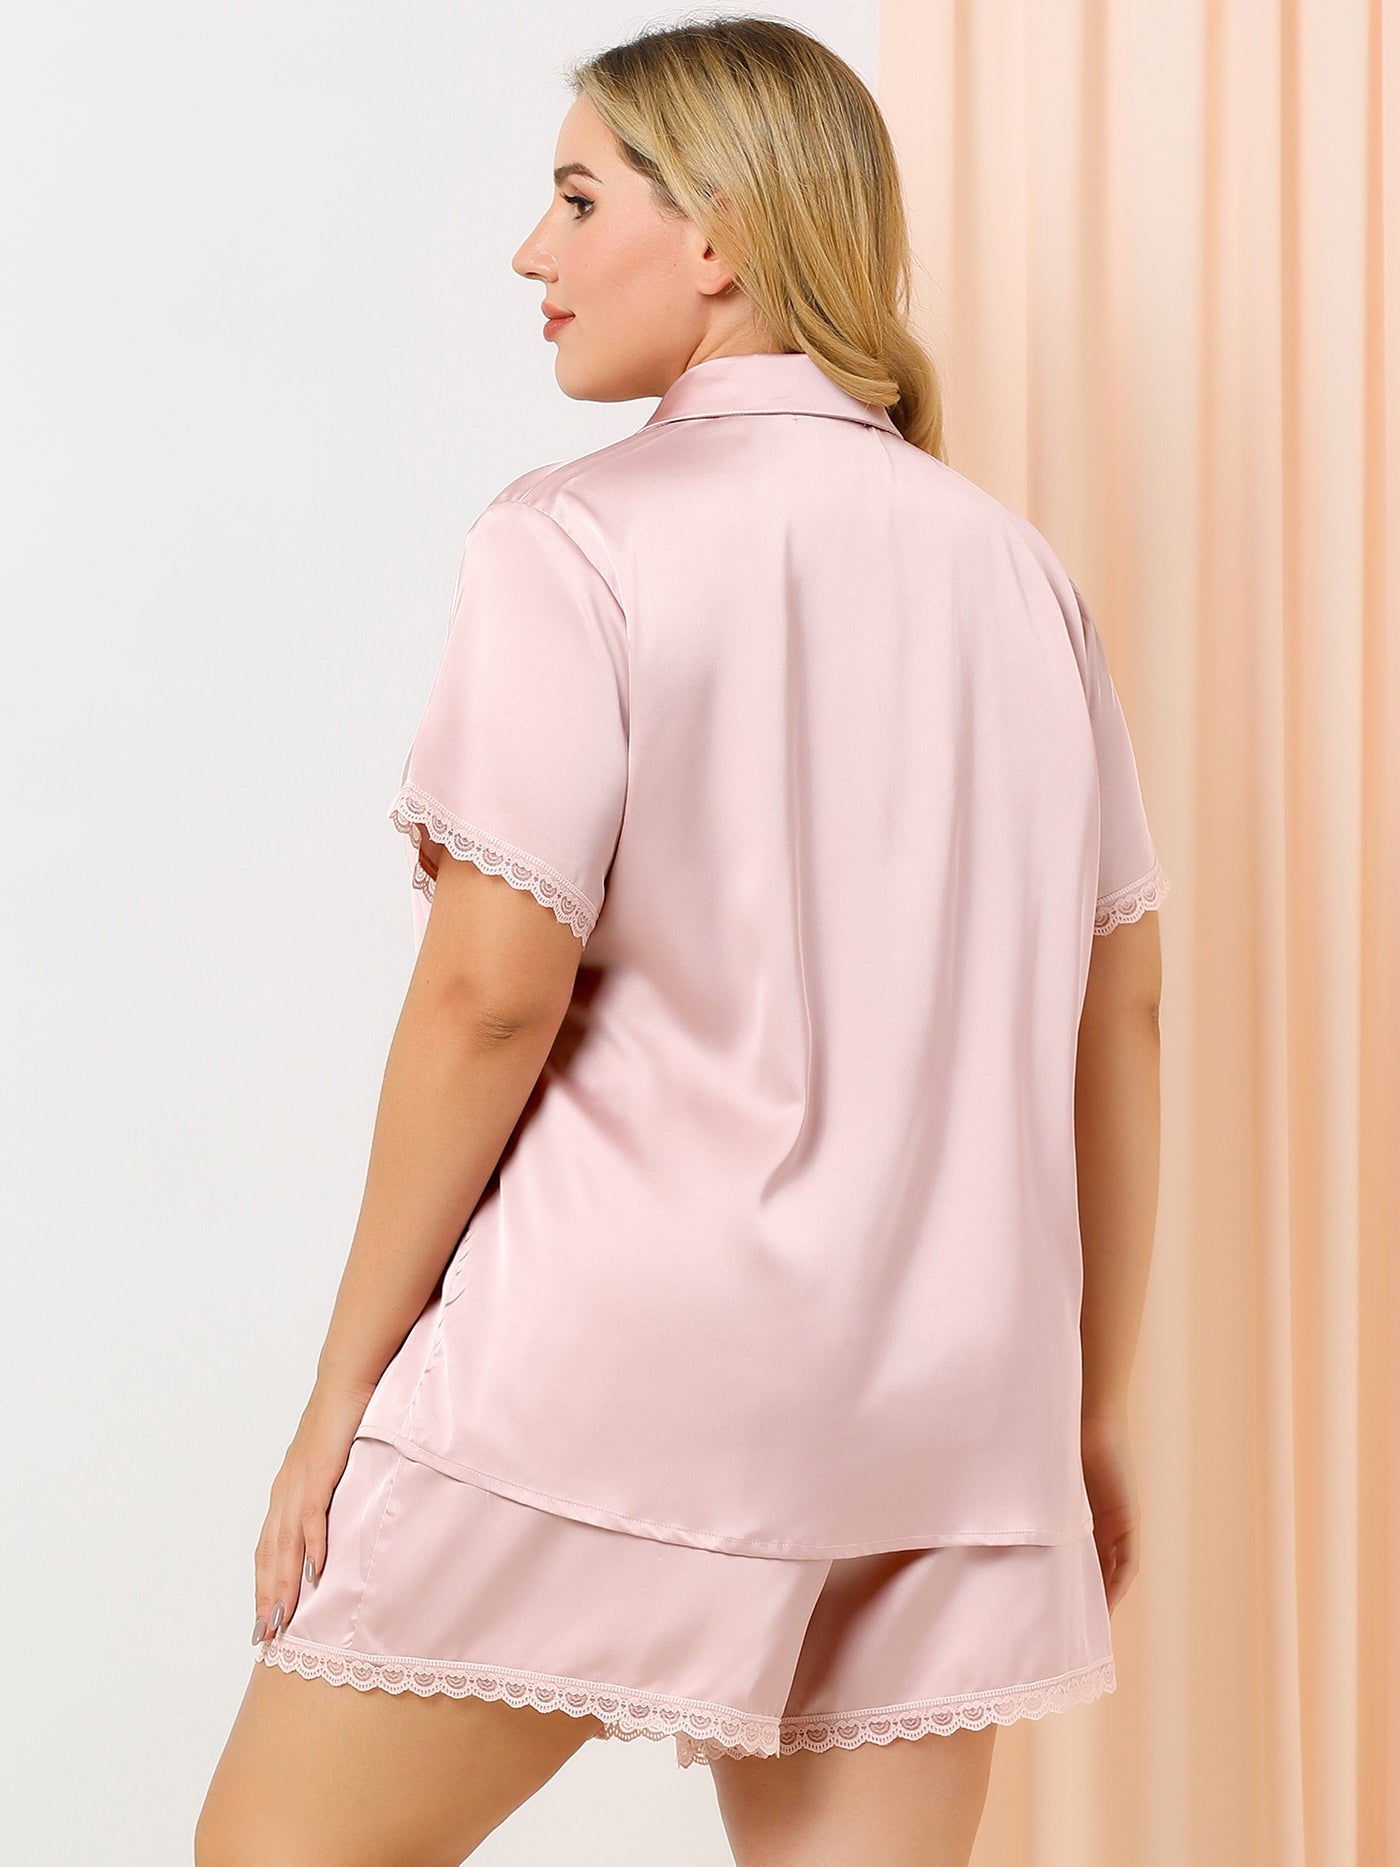 Bublédon Women's Plus Size Lounge Sets Pajama Collar Chemical Lace Short Sleeve Pajamas Set